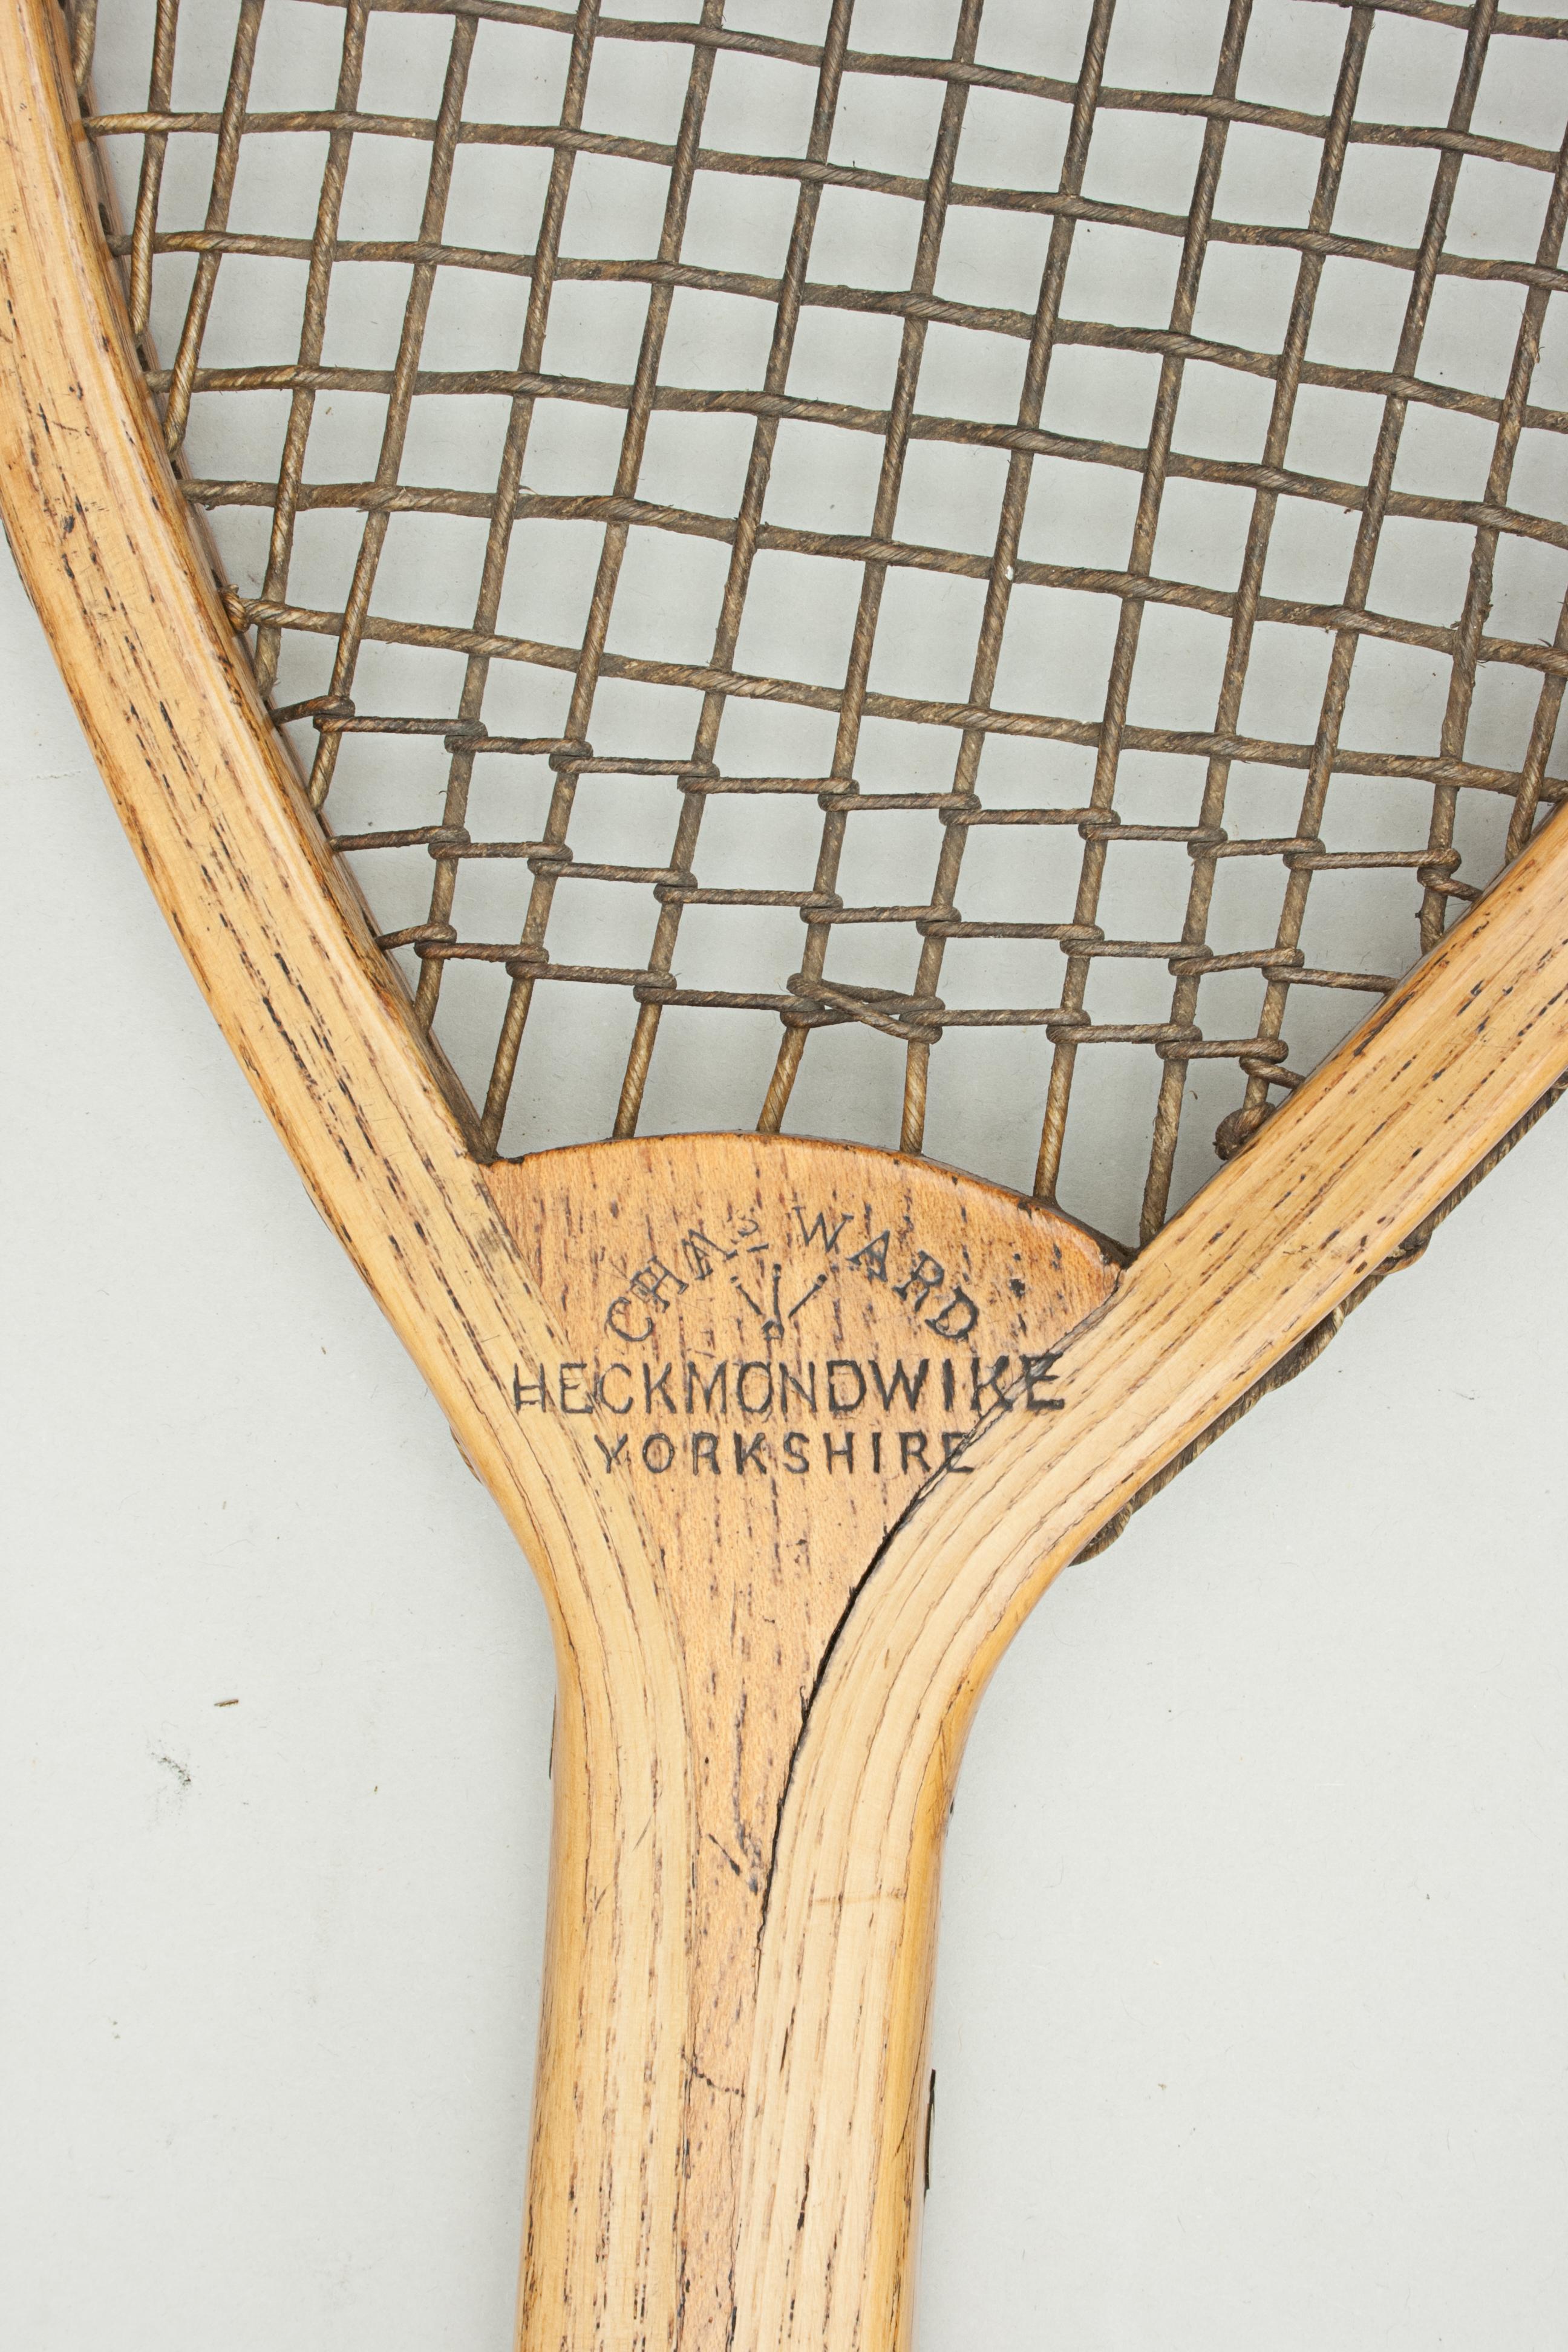 Late 19th Century Charles Ward Lawn Tennis Racket